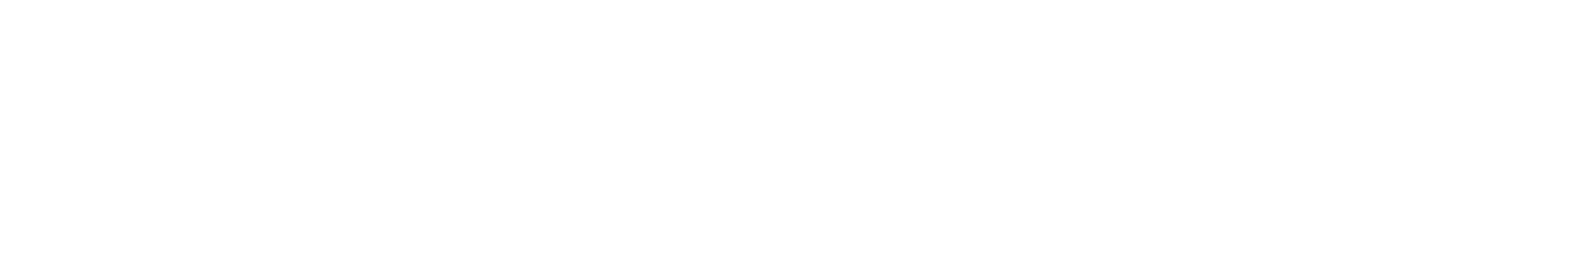 Toppan logo large for dark backgrounds (transparent PNG)